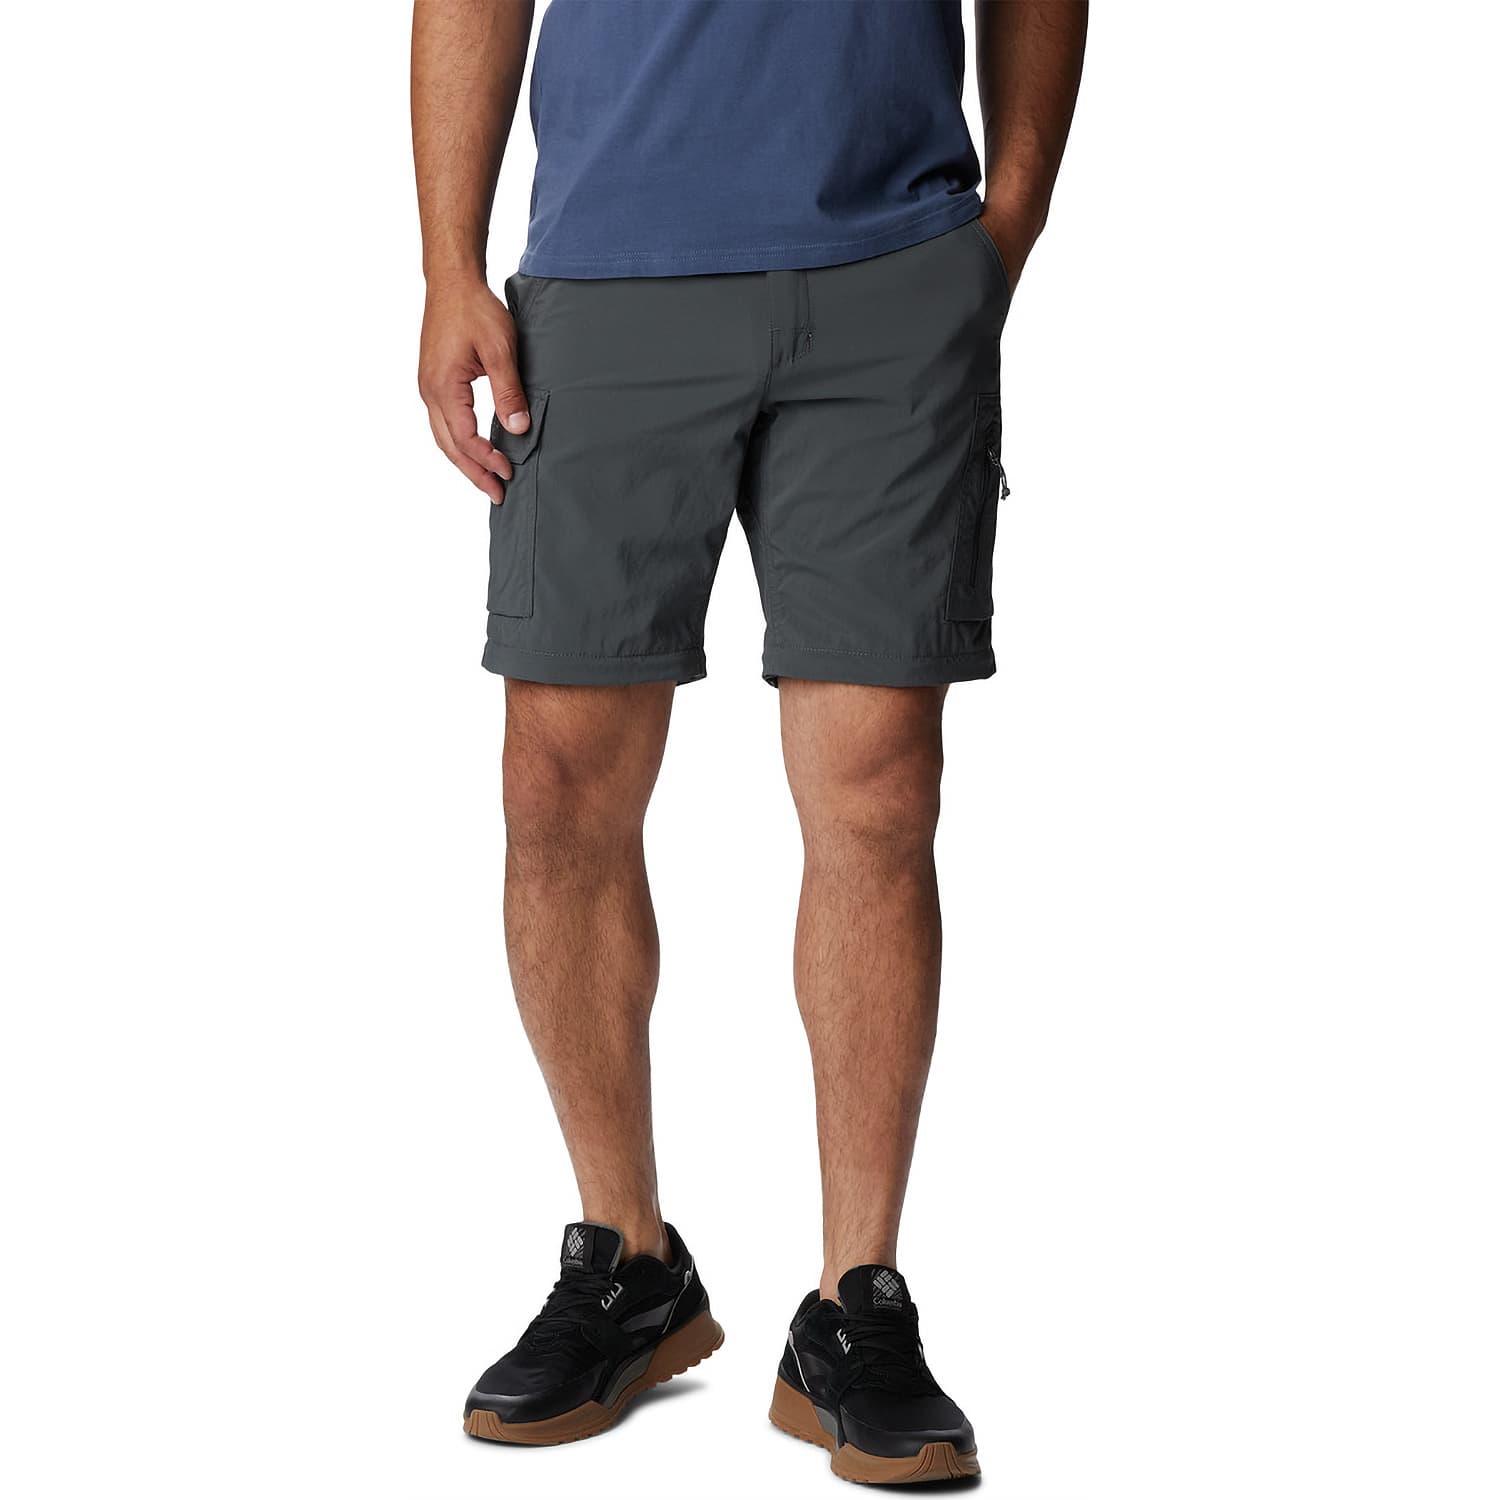 Columbia® Men’s Silver Ridge™ Utility Convertible Pants